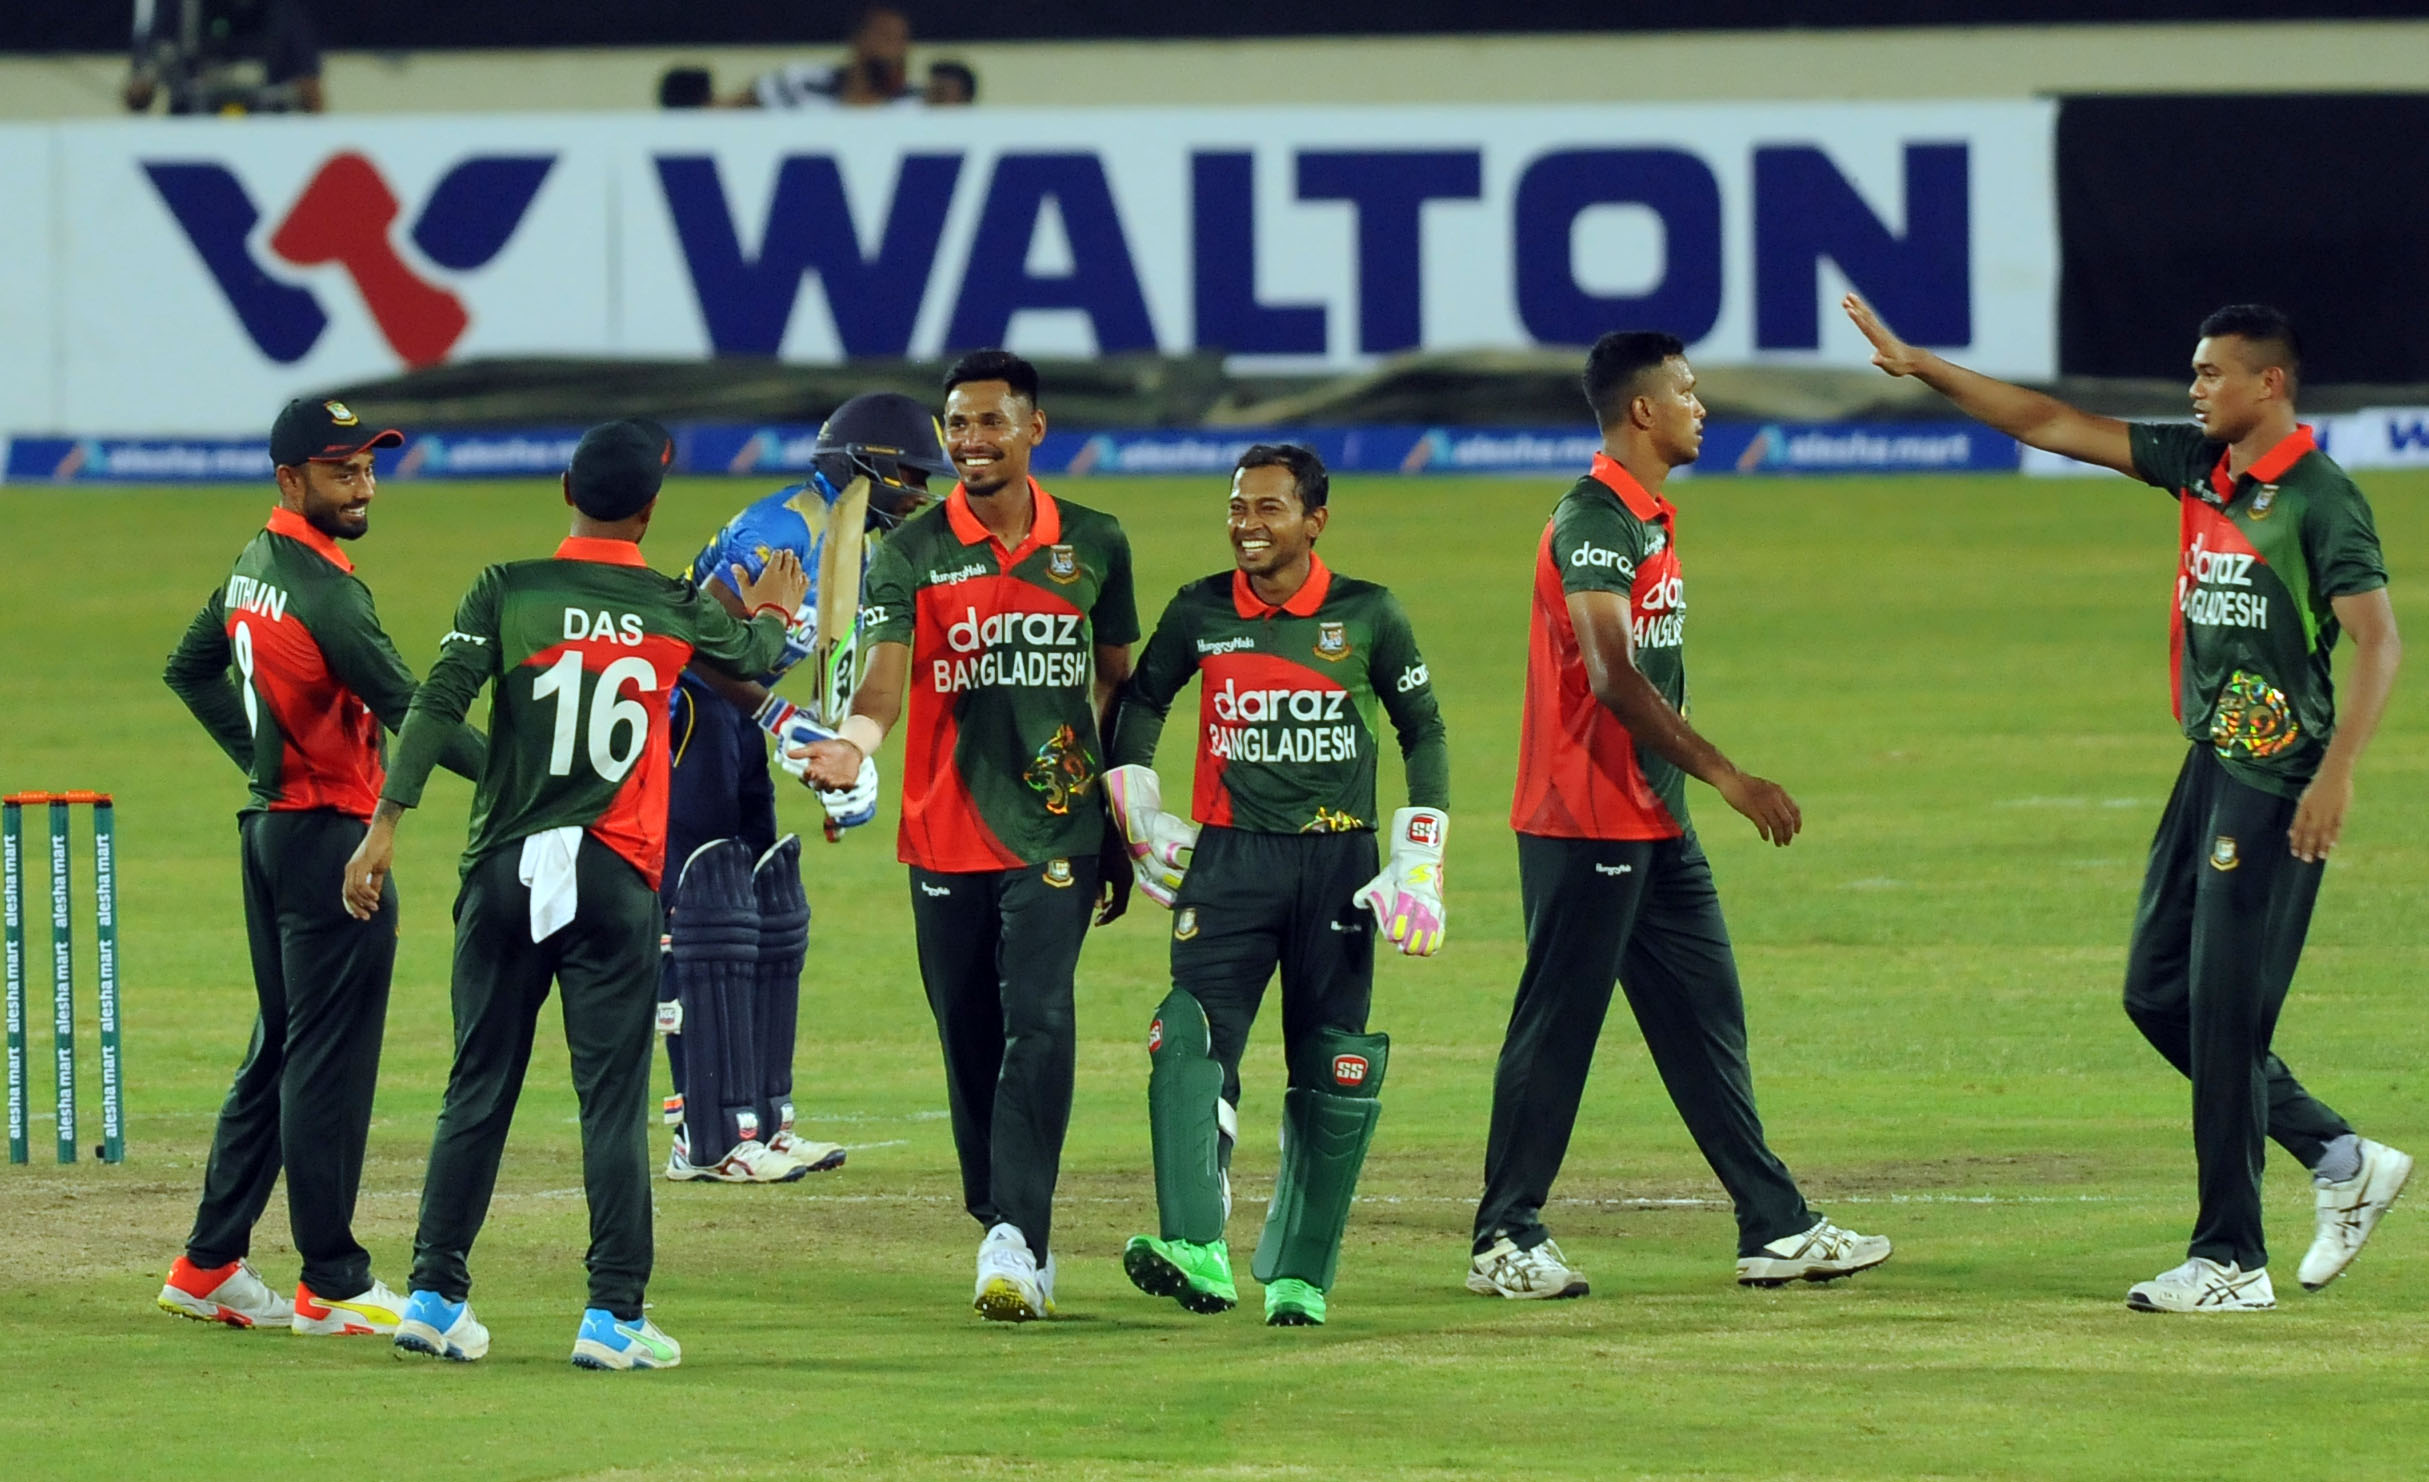 Bangladesh Cricket Team News Players Fixture And Result Fixtures